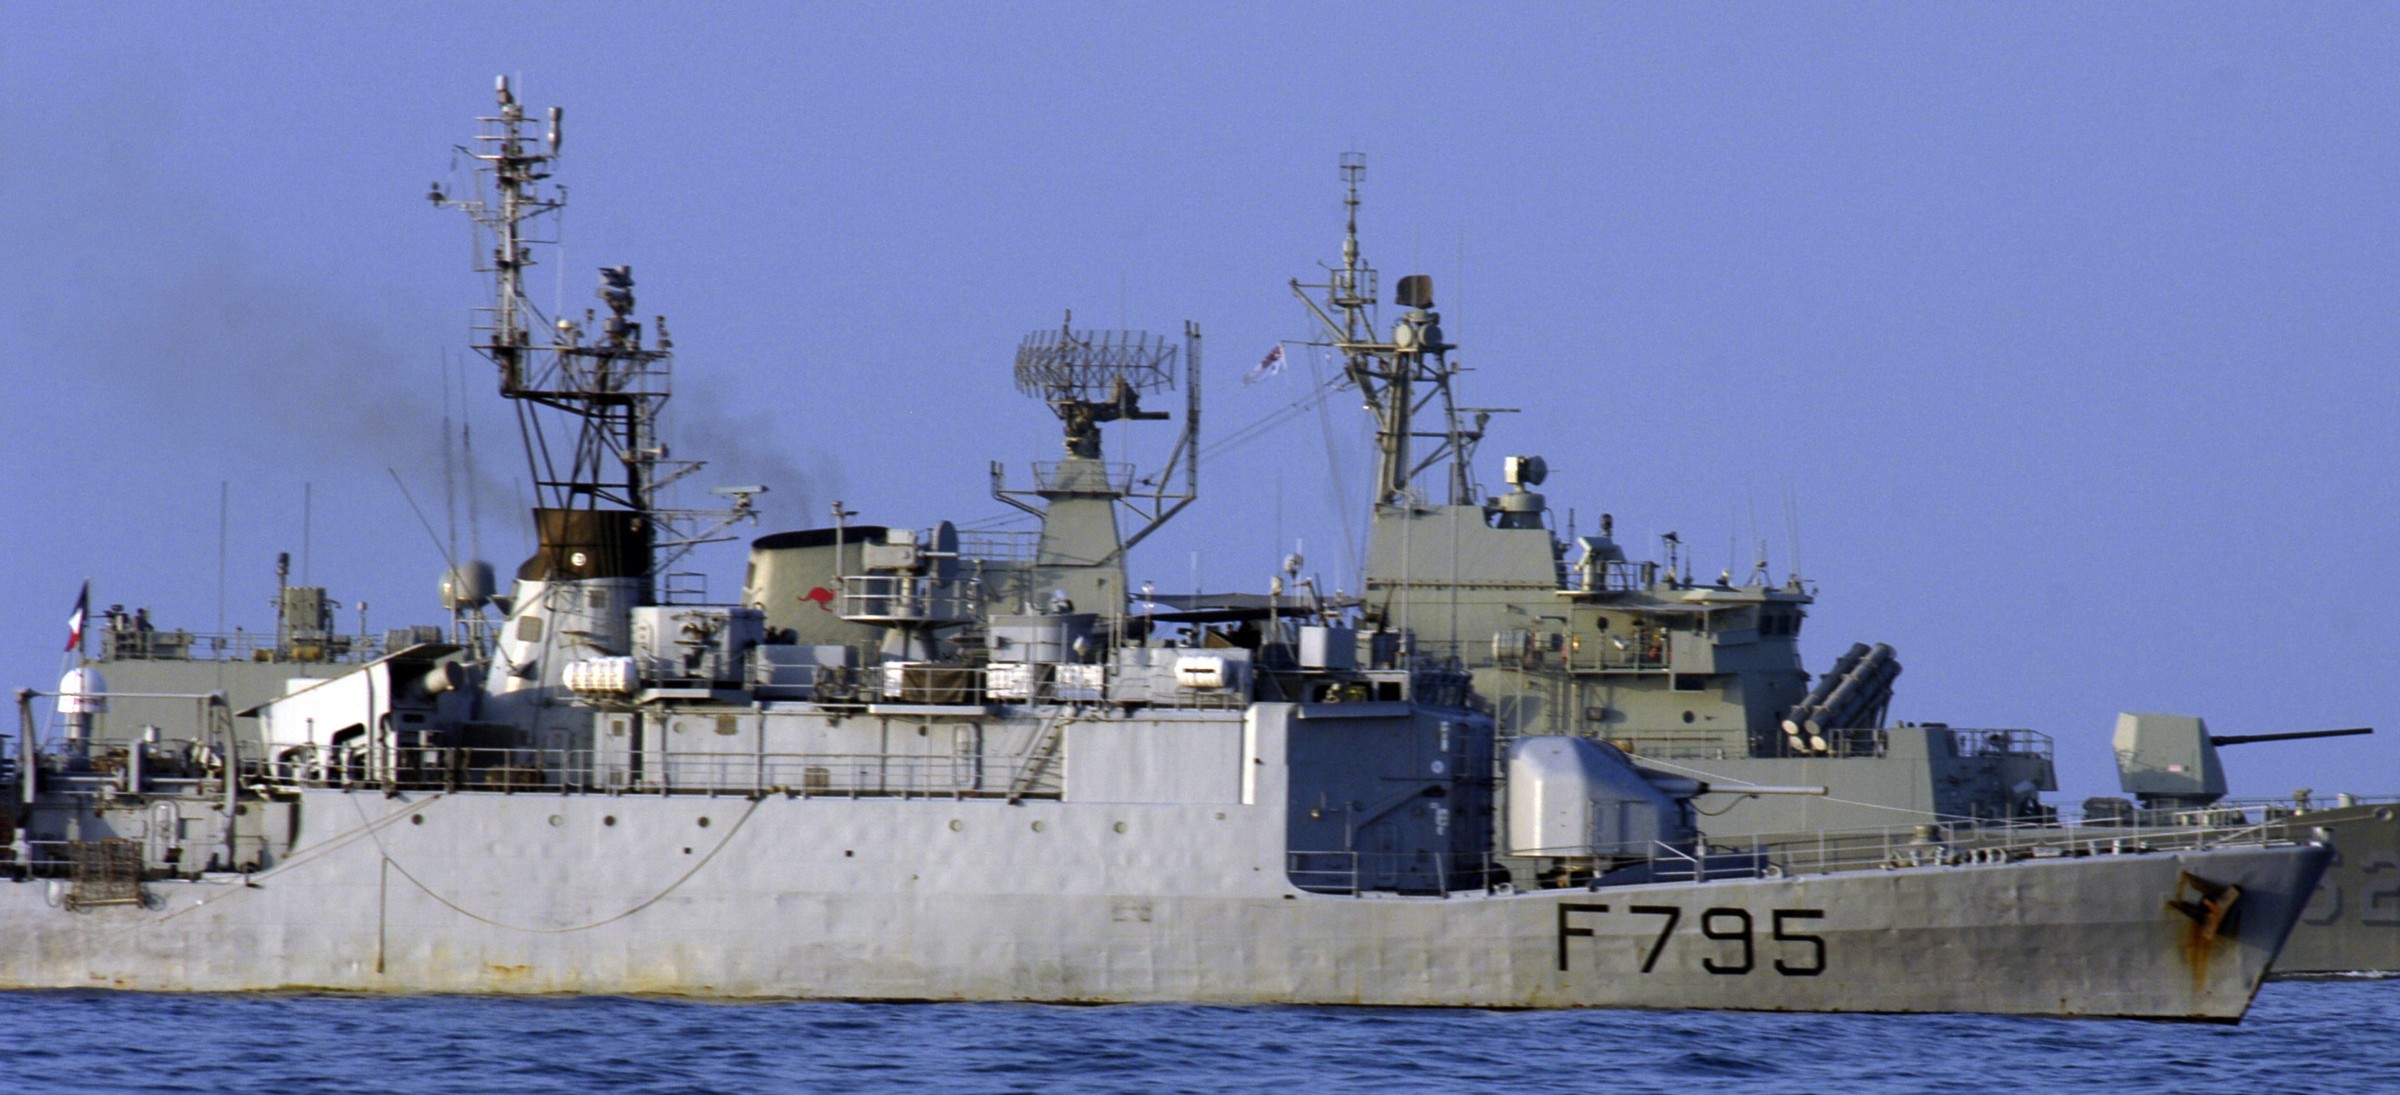 f-795 fs commandant ducuing d'estienne d'orves class corvette type a69 aviso french navy marine nationale 06